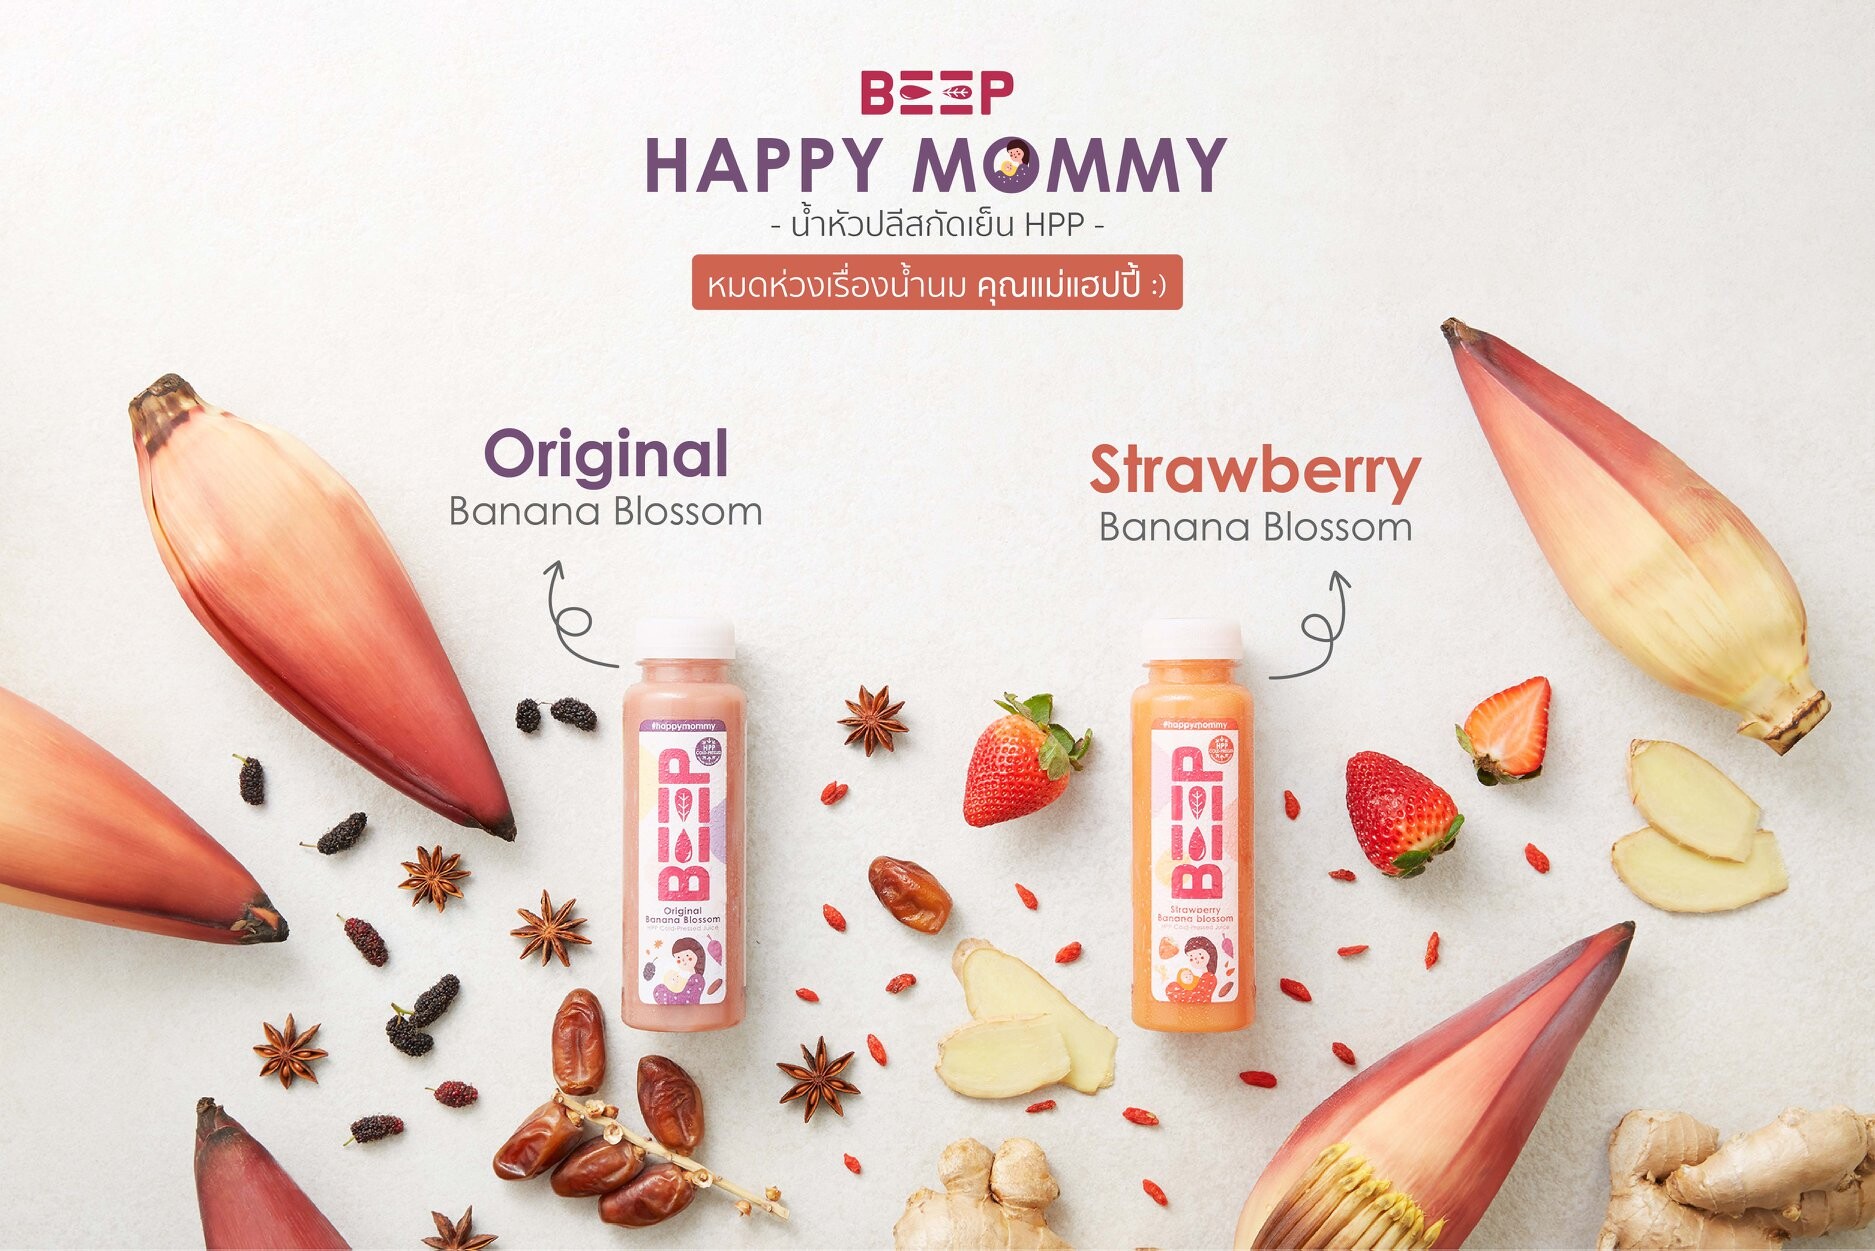 BEEP HAPPY MOMMY น้ำหัวปลีสกัดเย็น HPP ตัวช่วยคุณแม่ยุคใหม่ที่ใส่ใจสุขภาพ